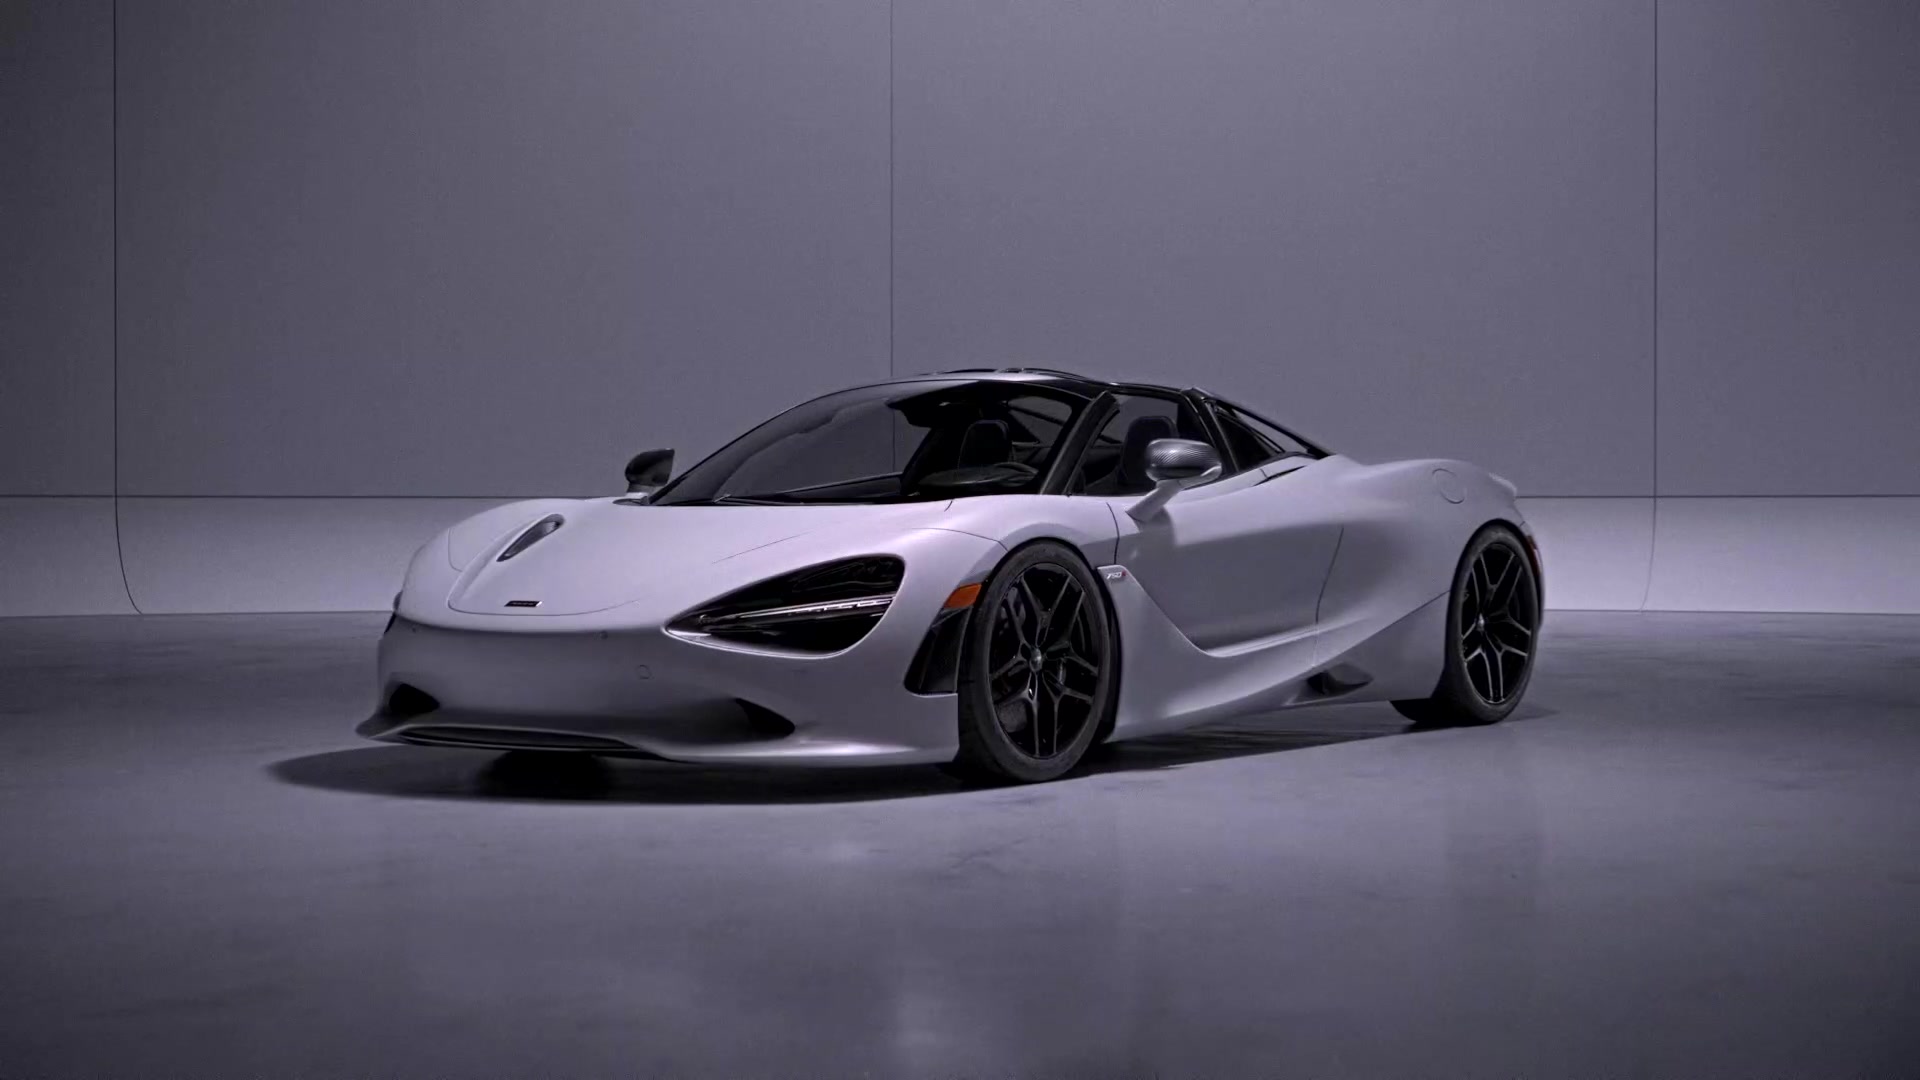 McLaren Introduces New Benchmark 750S Supercar Through Cinematic Digital Film Animation